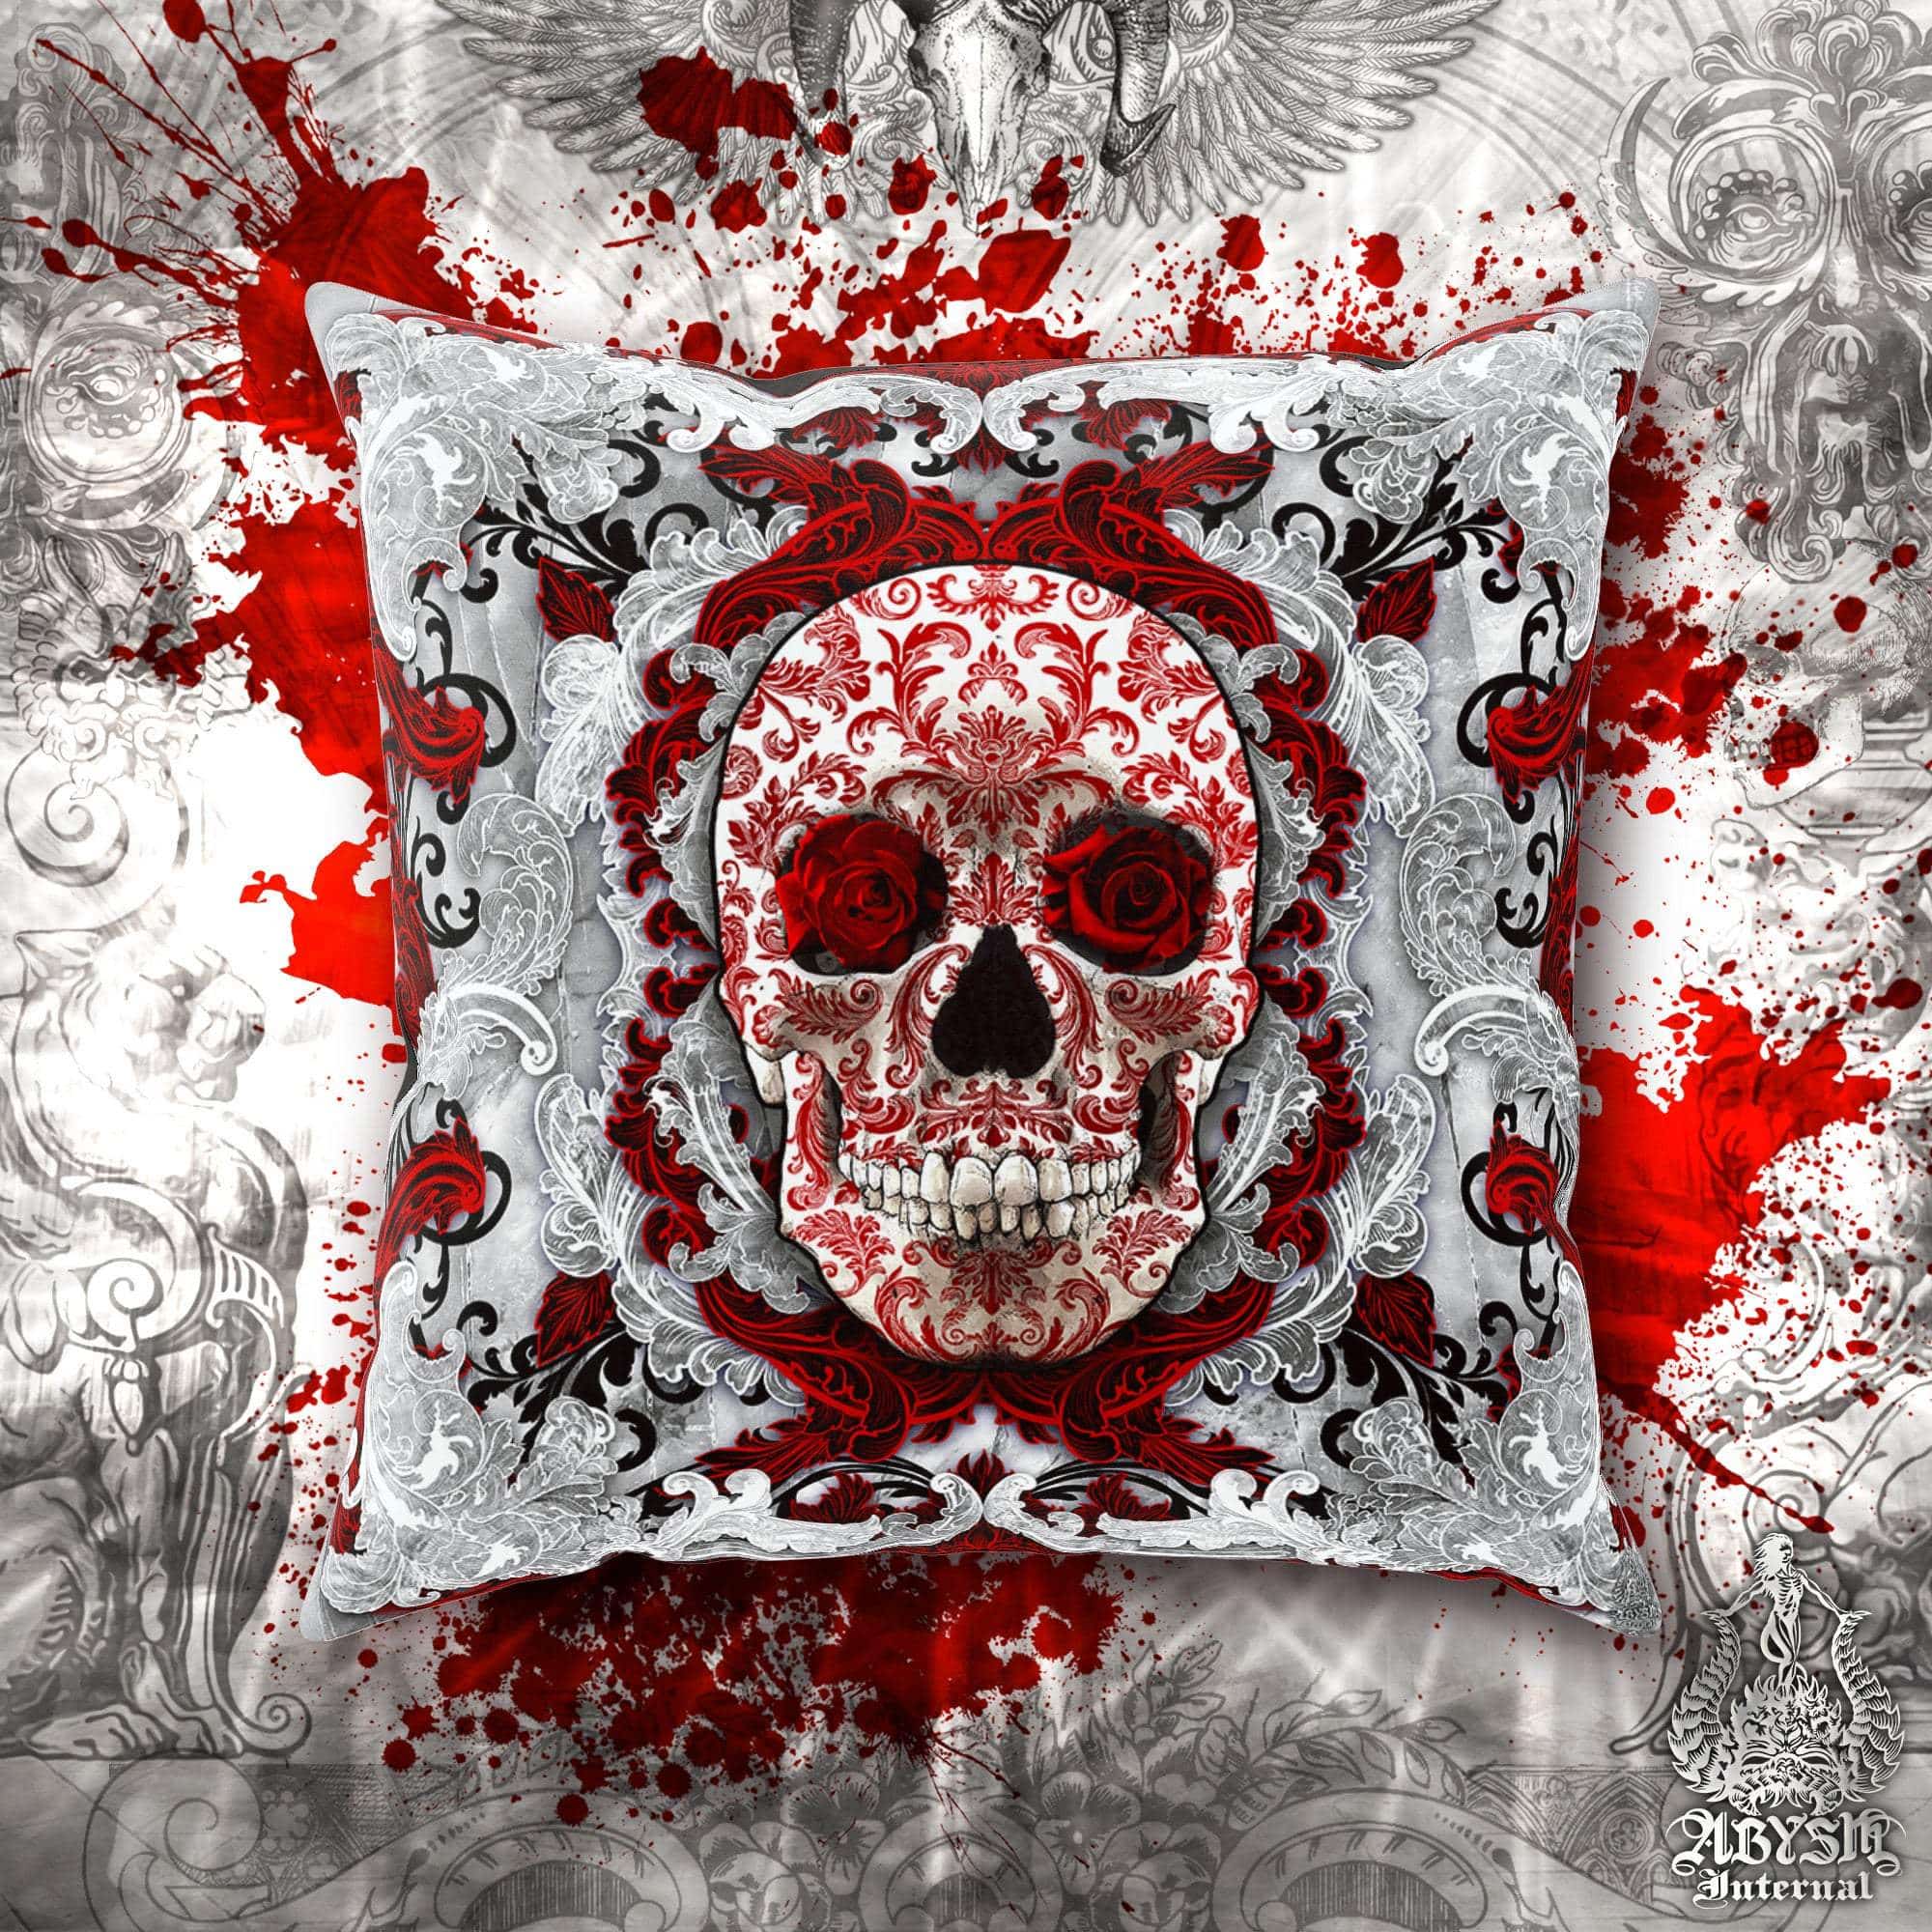 Skull Throw Pillow, Decorative Accent Cushion, Gothic Room Decor, Macabre Art, Alternative Home - Bloody White Goth - Abysm Internal